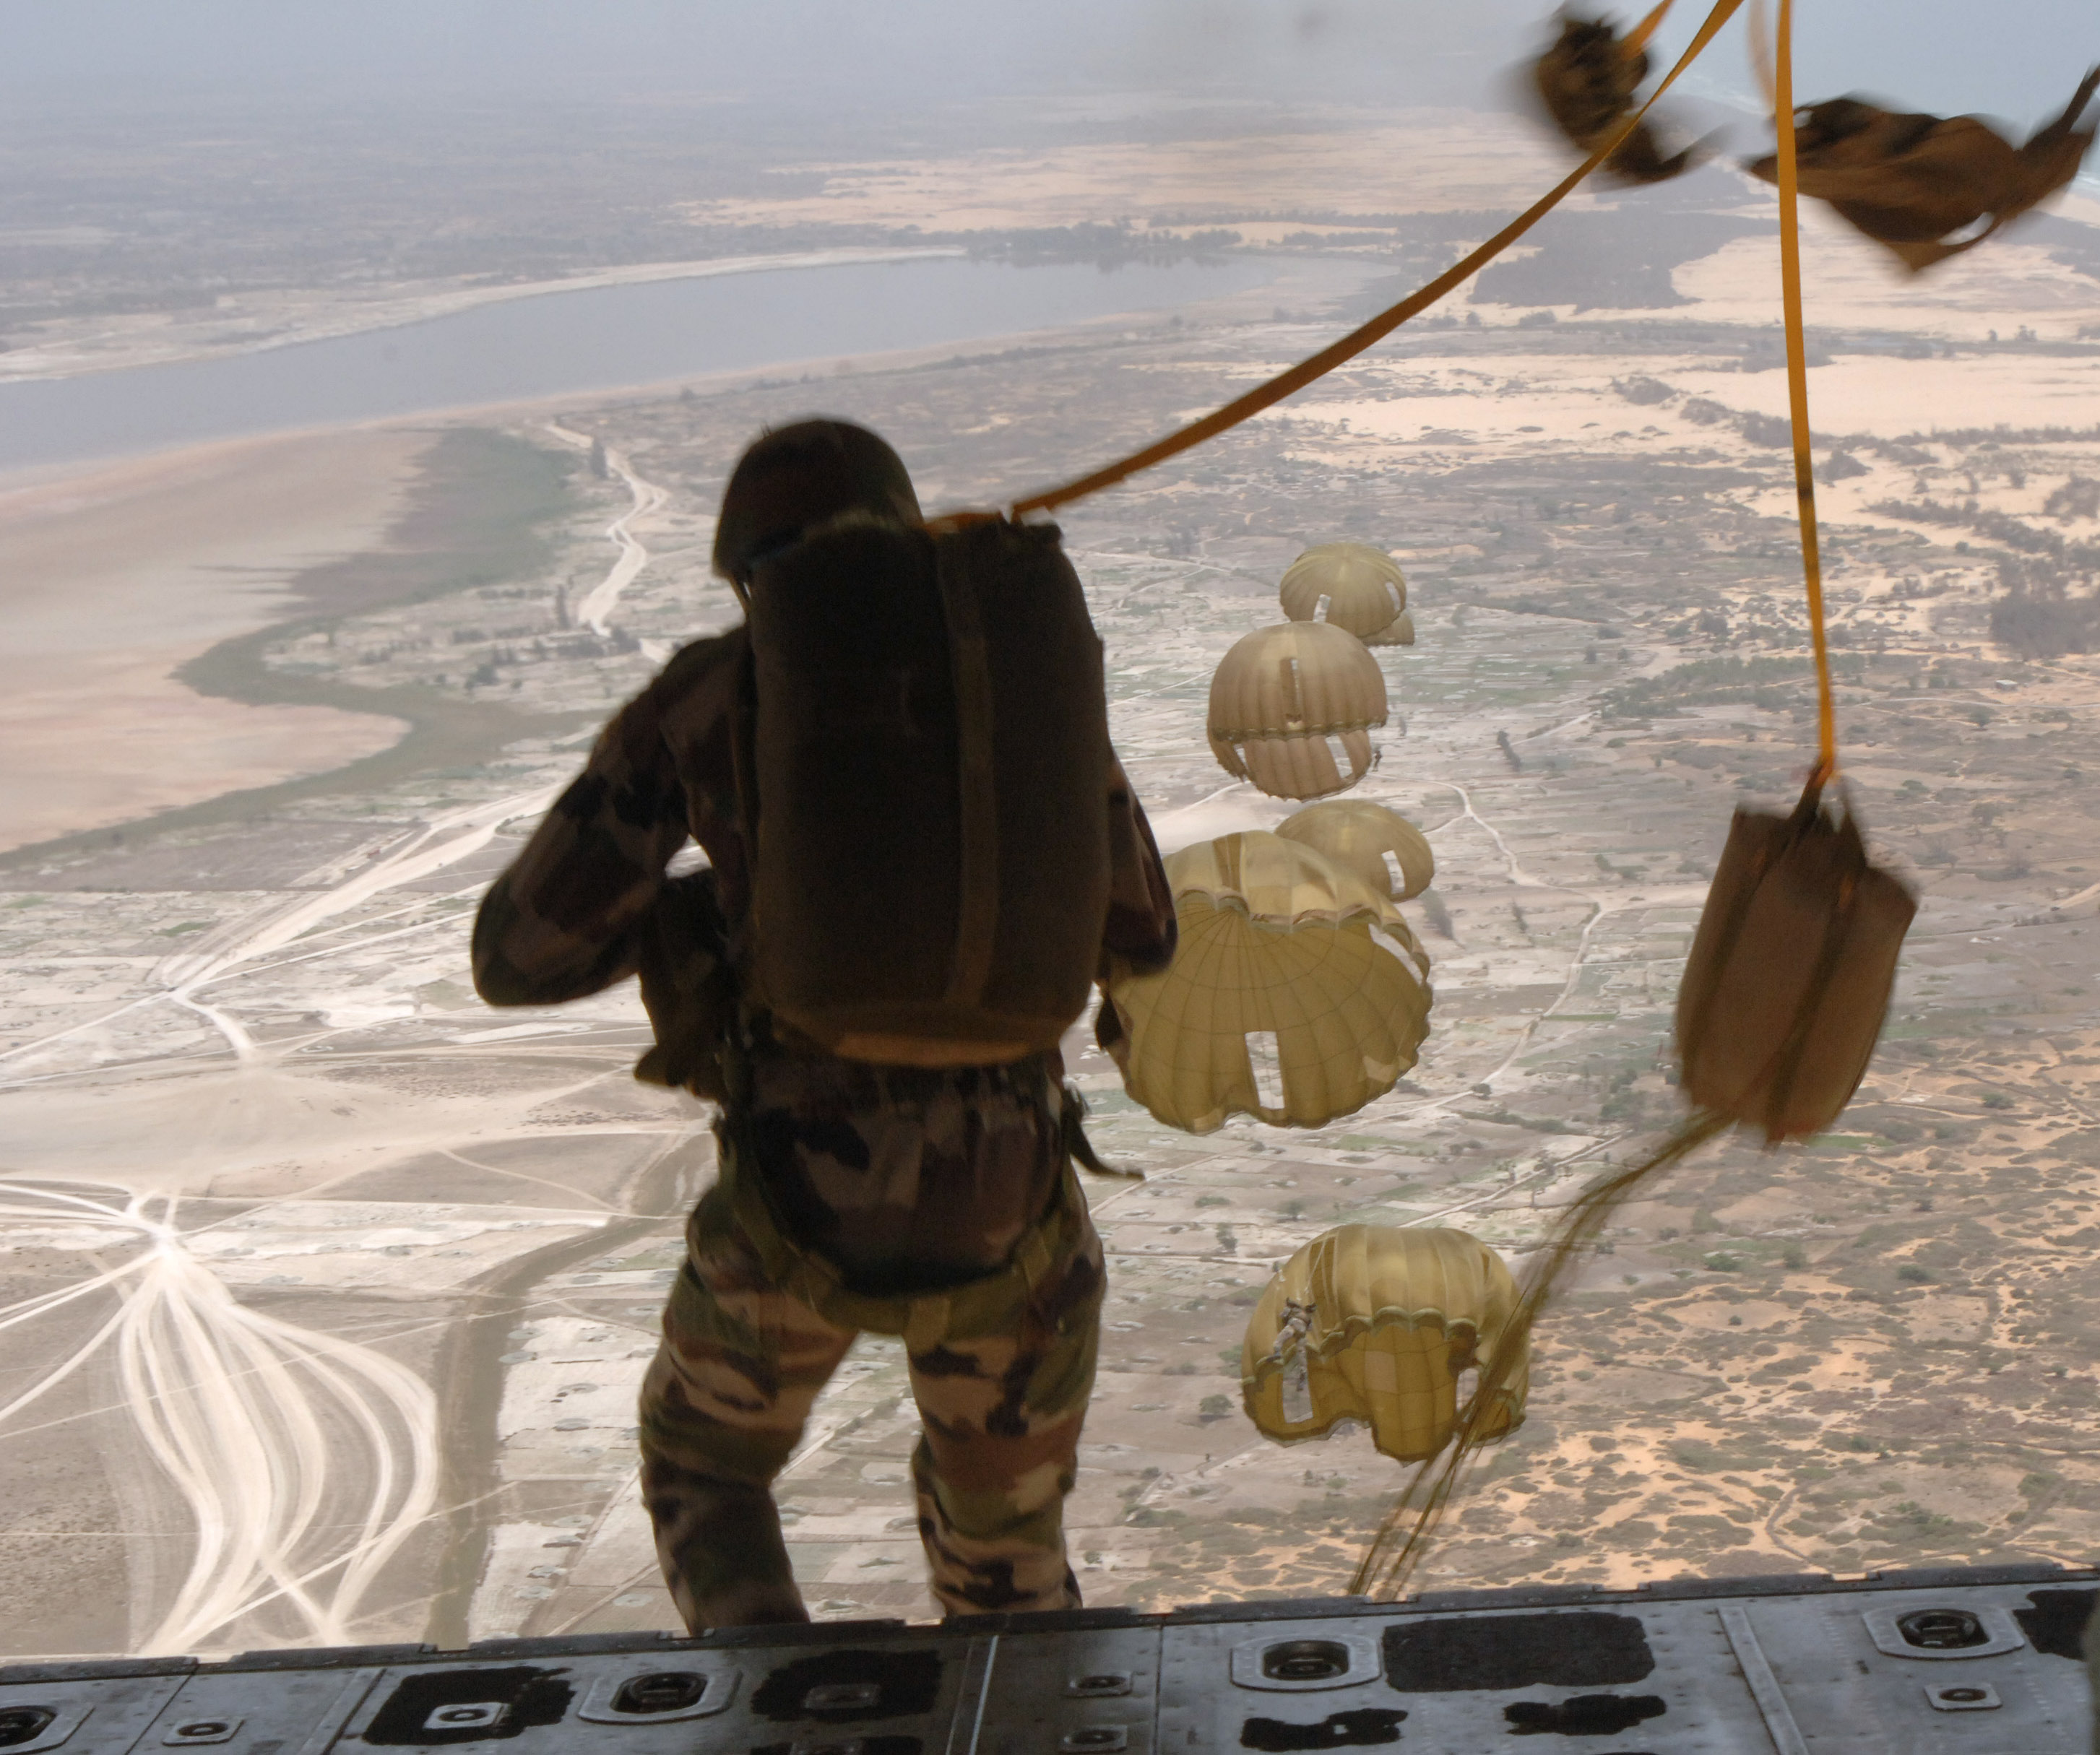 File:Senegal soldiers - parachute jump.jpg - Wikipedia